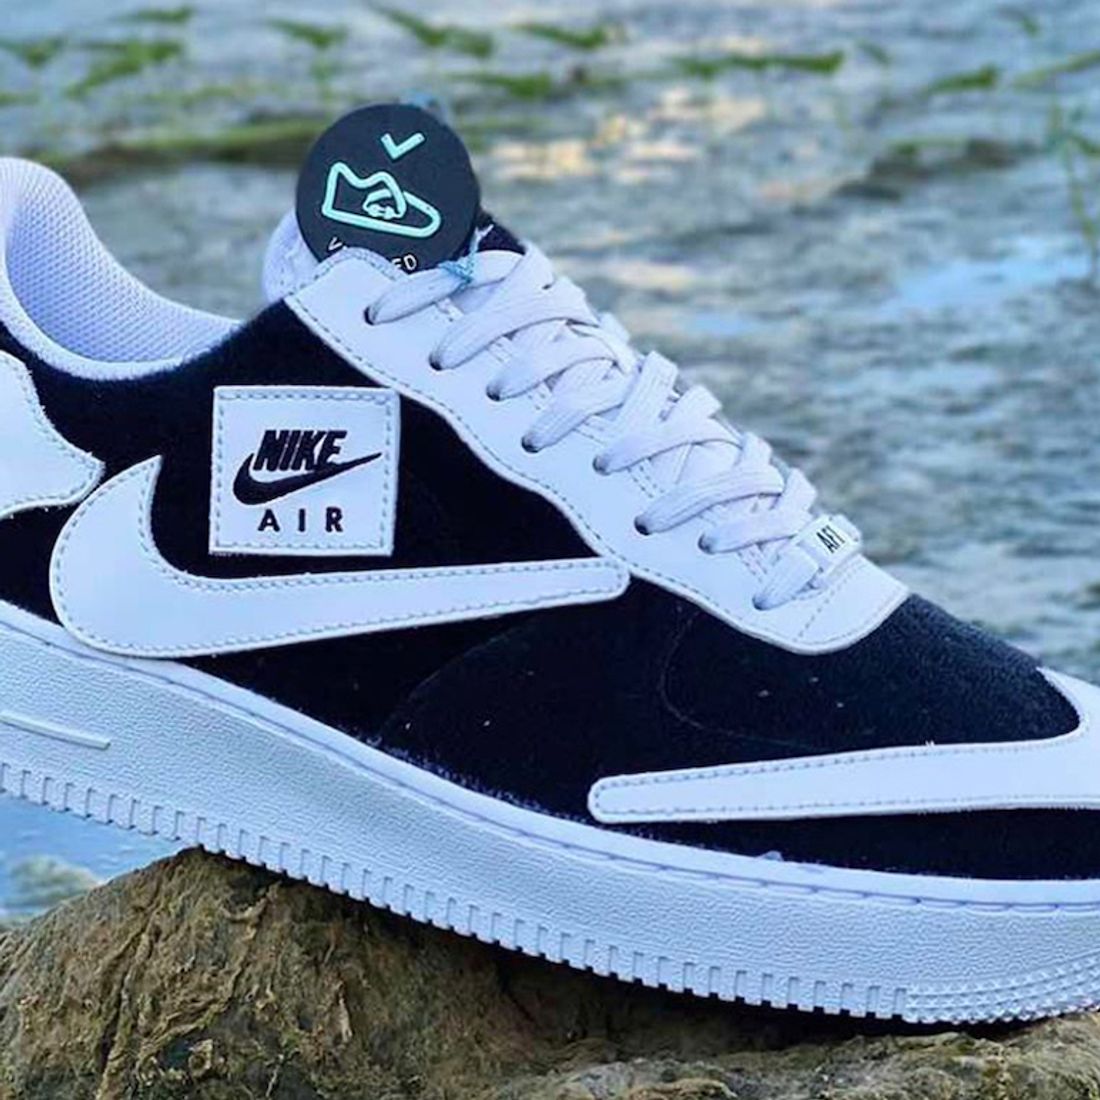 En cualquier momento Vacío Ecología Nike Cover the Air Force 1 in Velcro - Sneaker Freaker